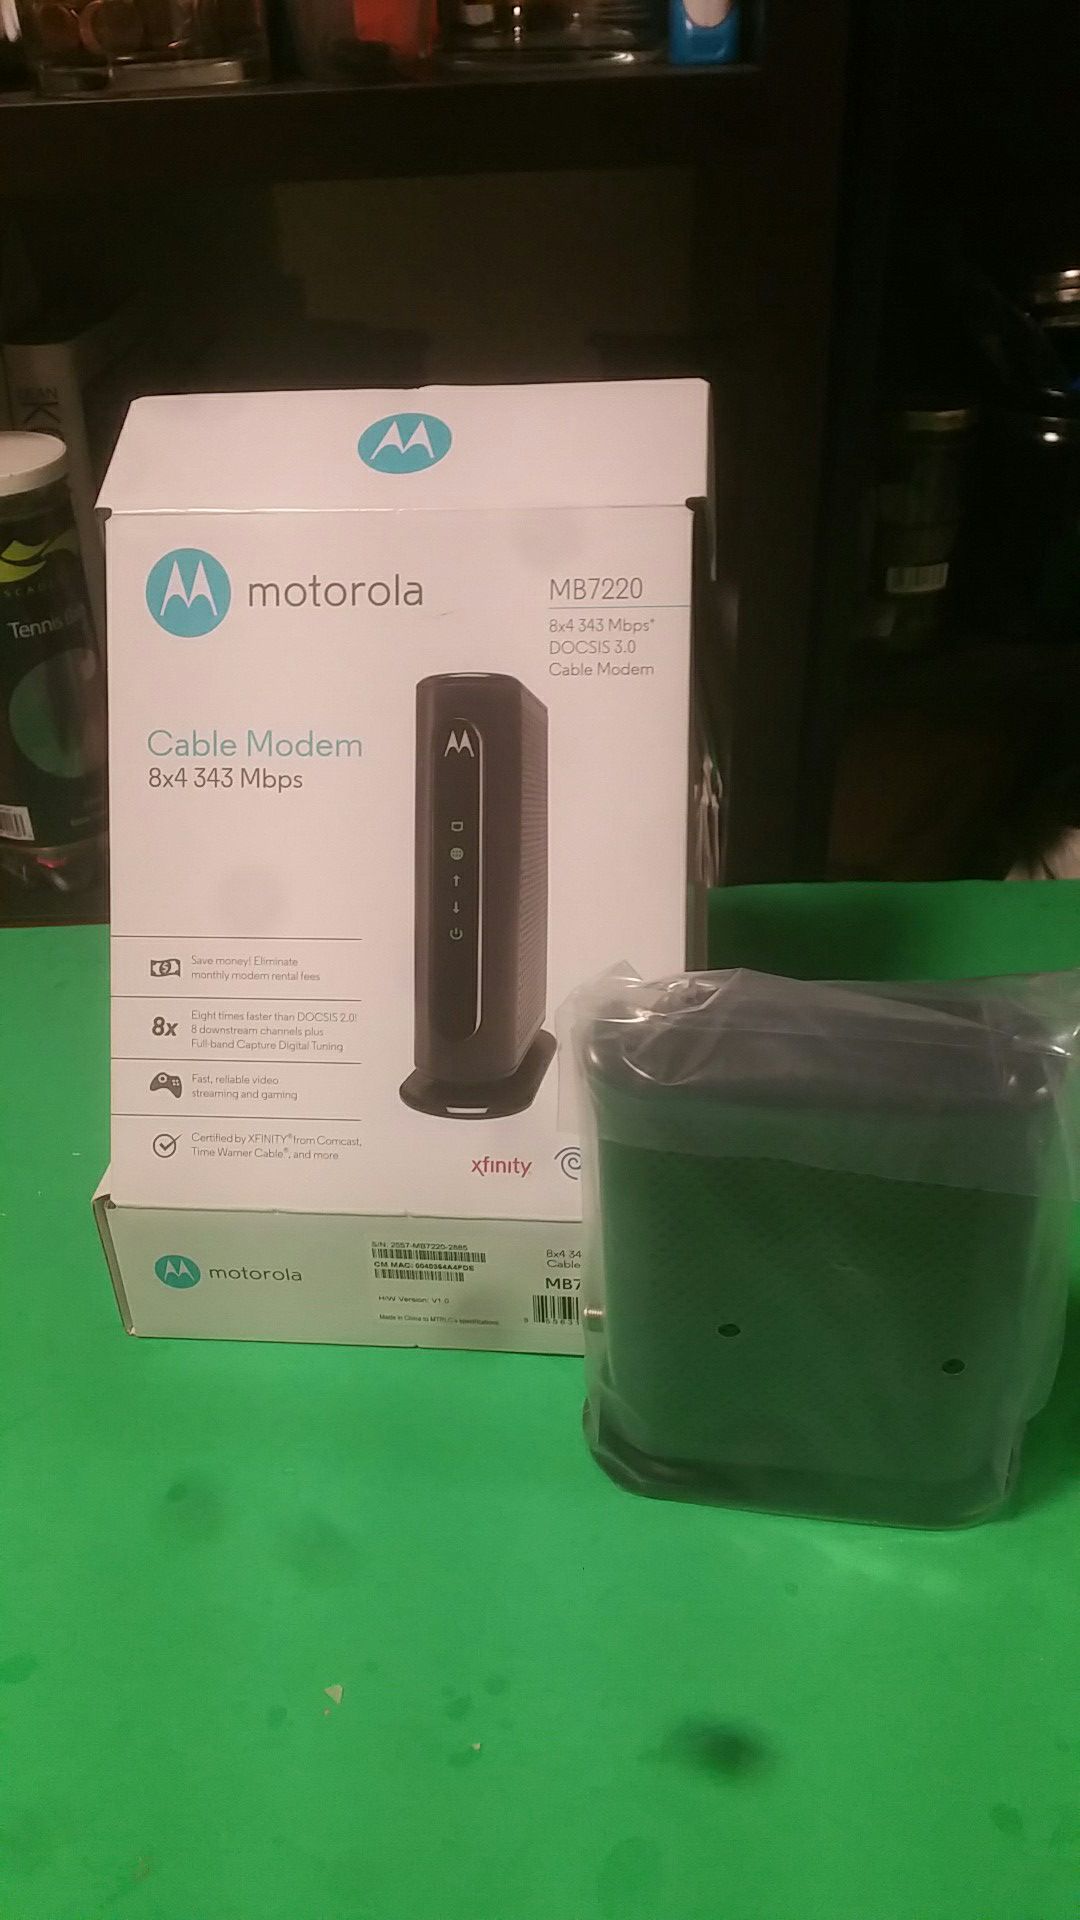 Motorola cable modem 85434 3 Mbps Motorola mb7220